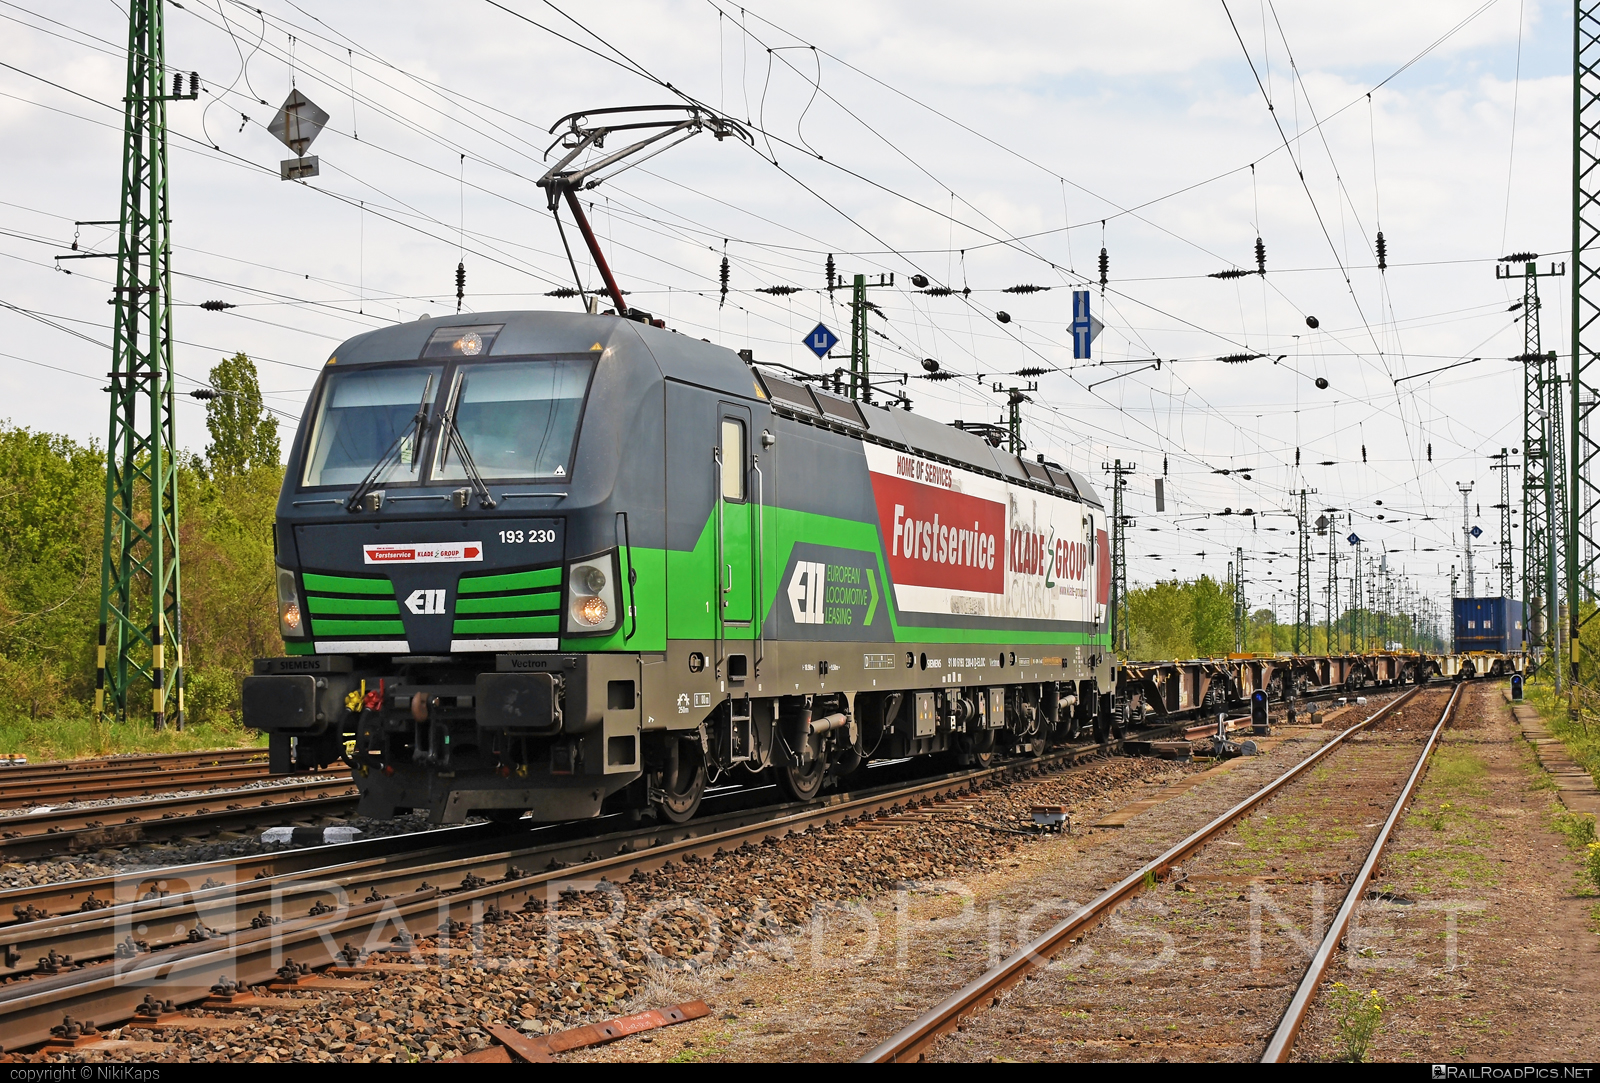 Siemens Vectron AC - 193 230 operated by FRACHTbahn Traktion GmbH #ell #ellgermany #eloc #europeanlocomotiveleasing #forstservice #frachtbahntraktion #frachtbahntraktiongmbh #kladegroup #siemens #siemensVectron #siemensVectronAC #vectron #vectronAC